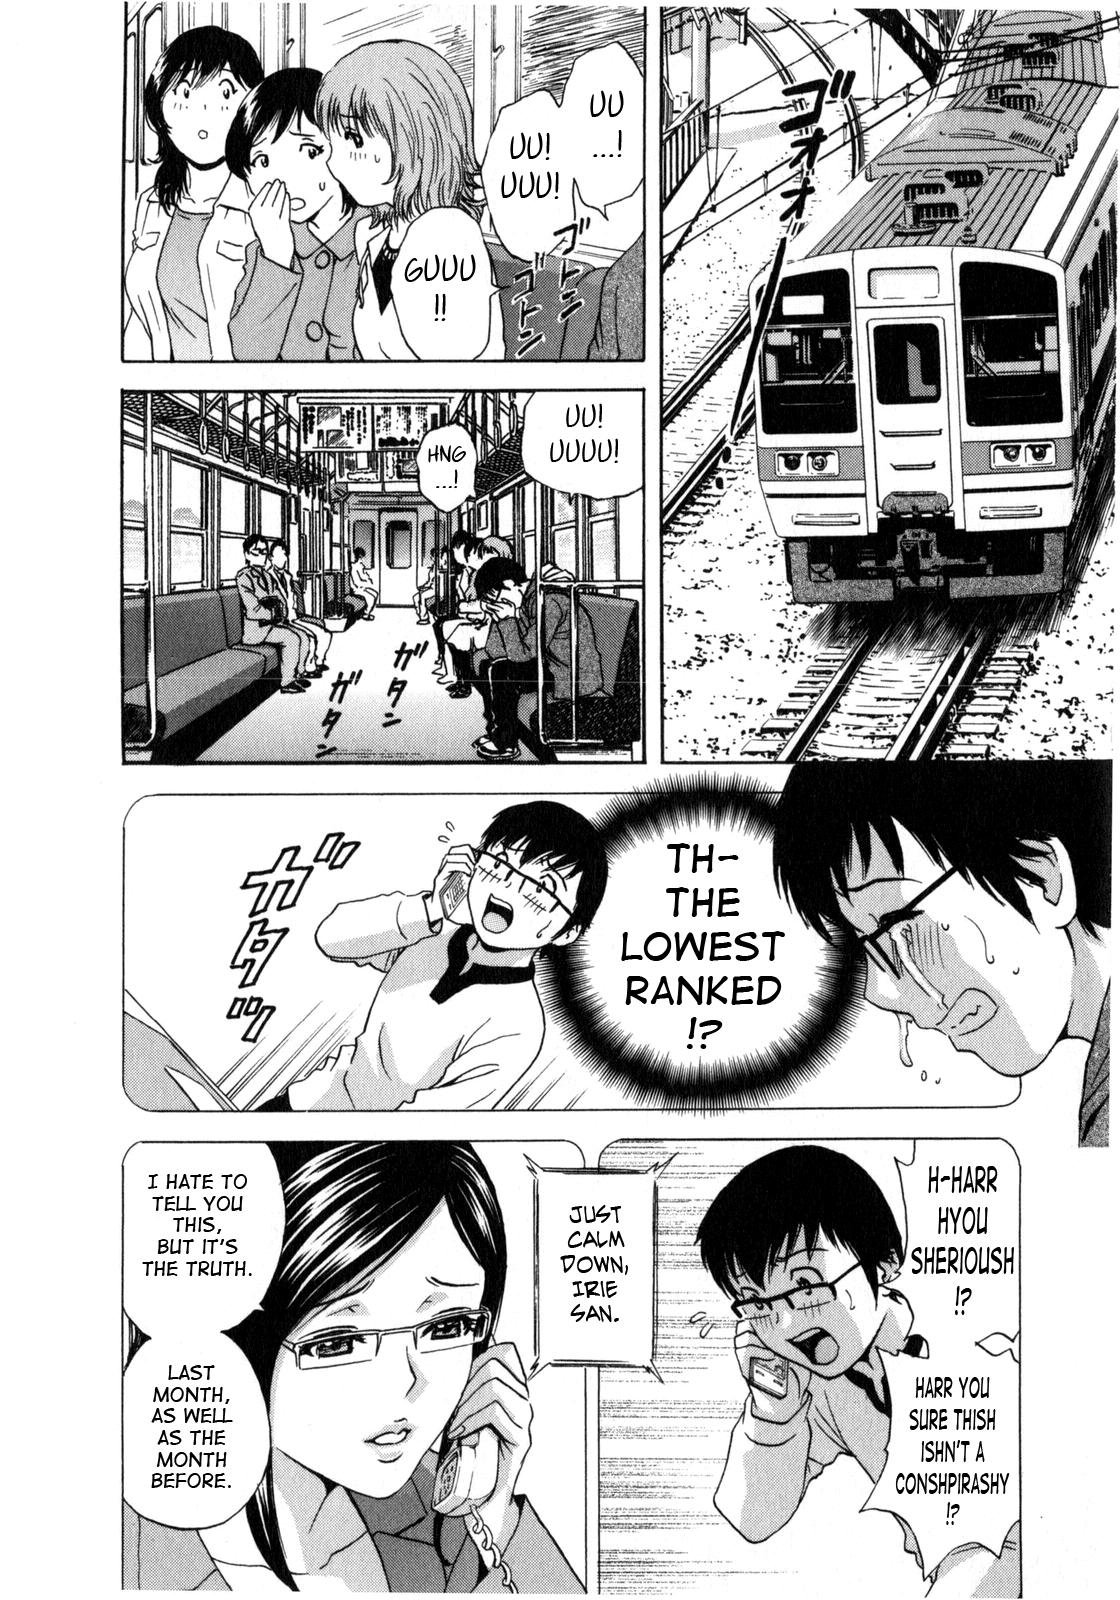 [Hidemaru] Life with Married Women Just Like a Manga 2 - Ch. 1-8 [English] {Tadanohito} 70